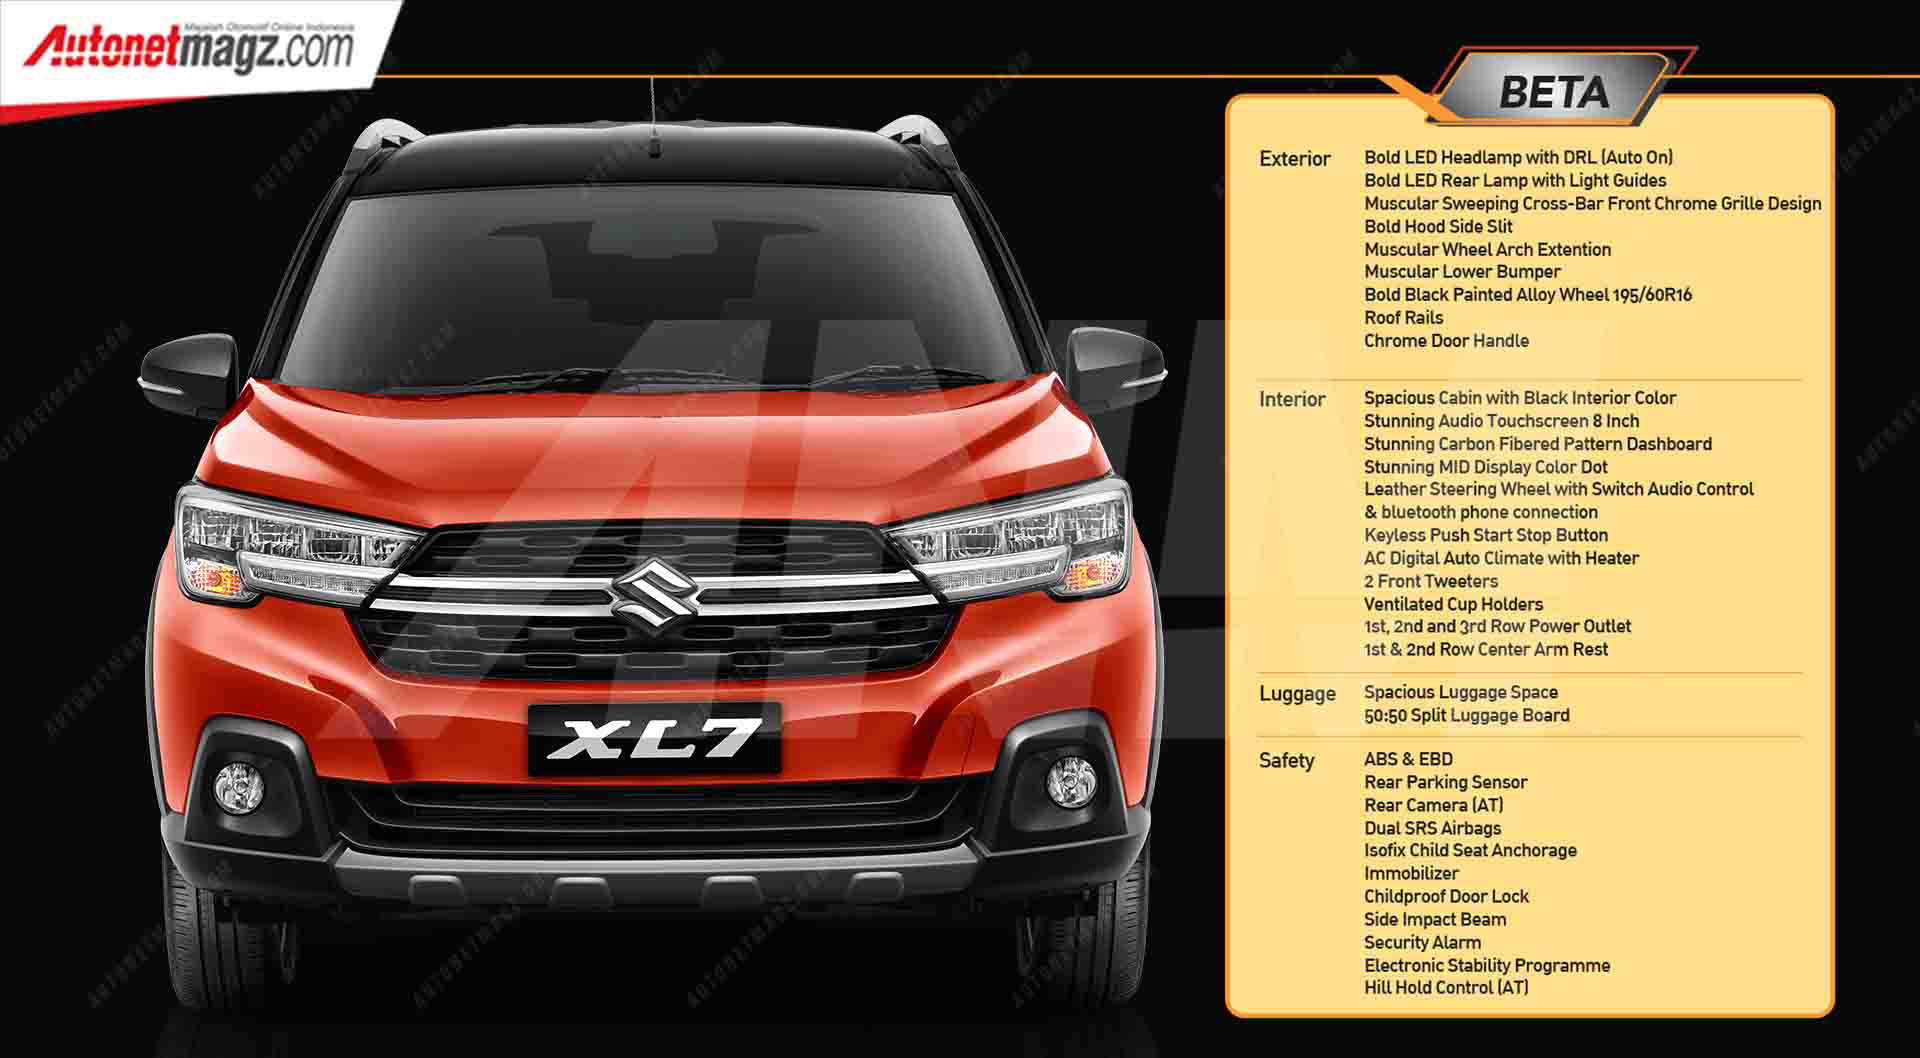 , Suzuki-XL7-Indonesia-Tipe-Beta: Suzuki-XL7-Indonesia-Tipe-Beta